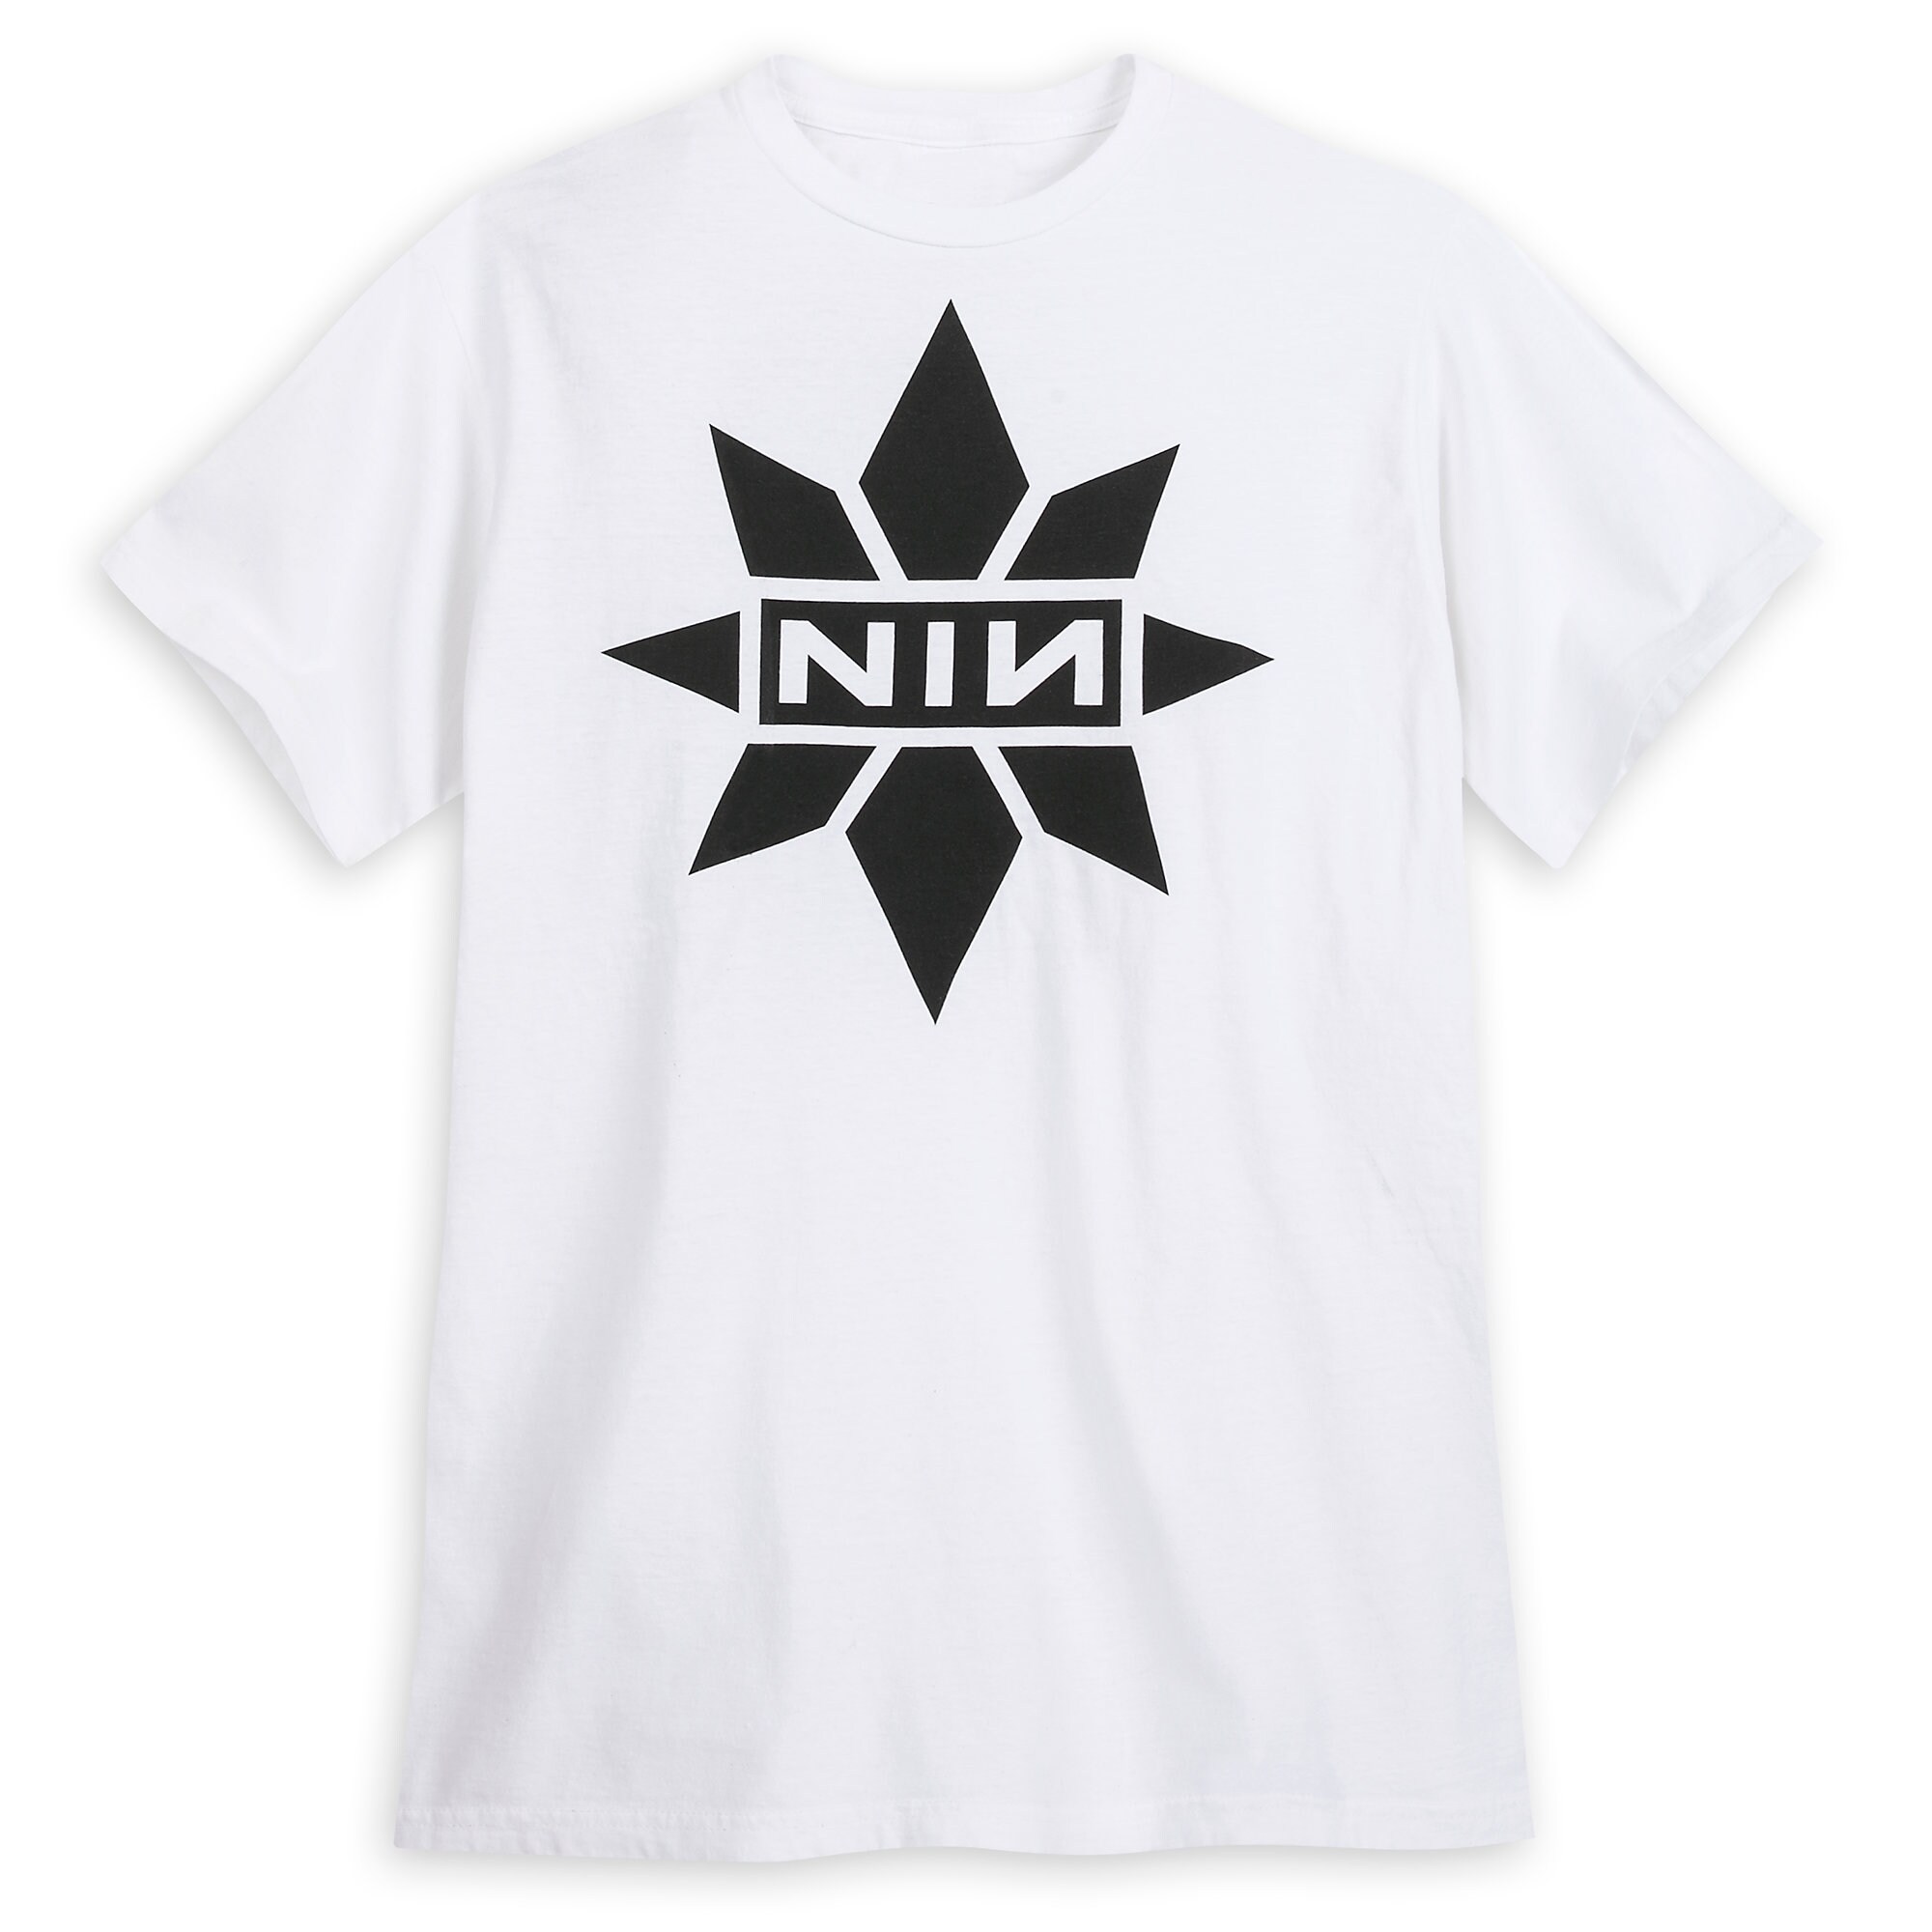 Nine Inch Nails T-Shirt for Adults - Marvel's Captain Marvel